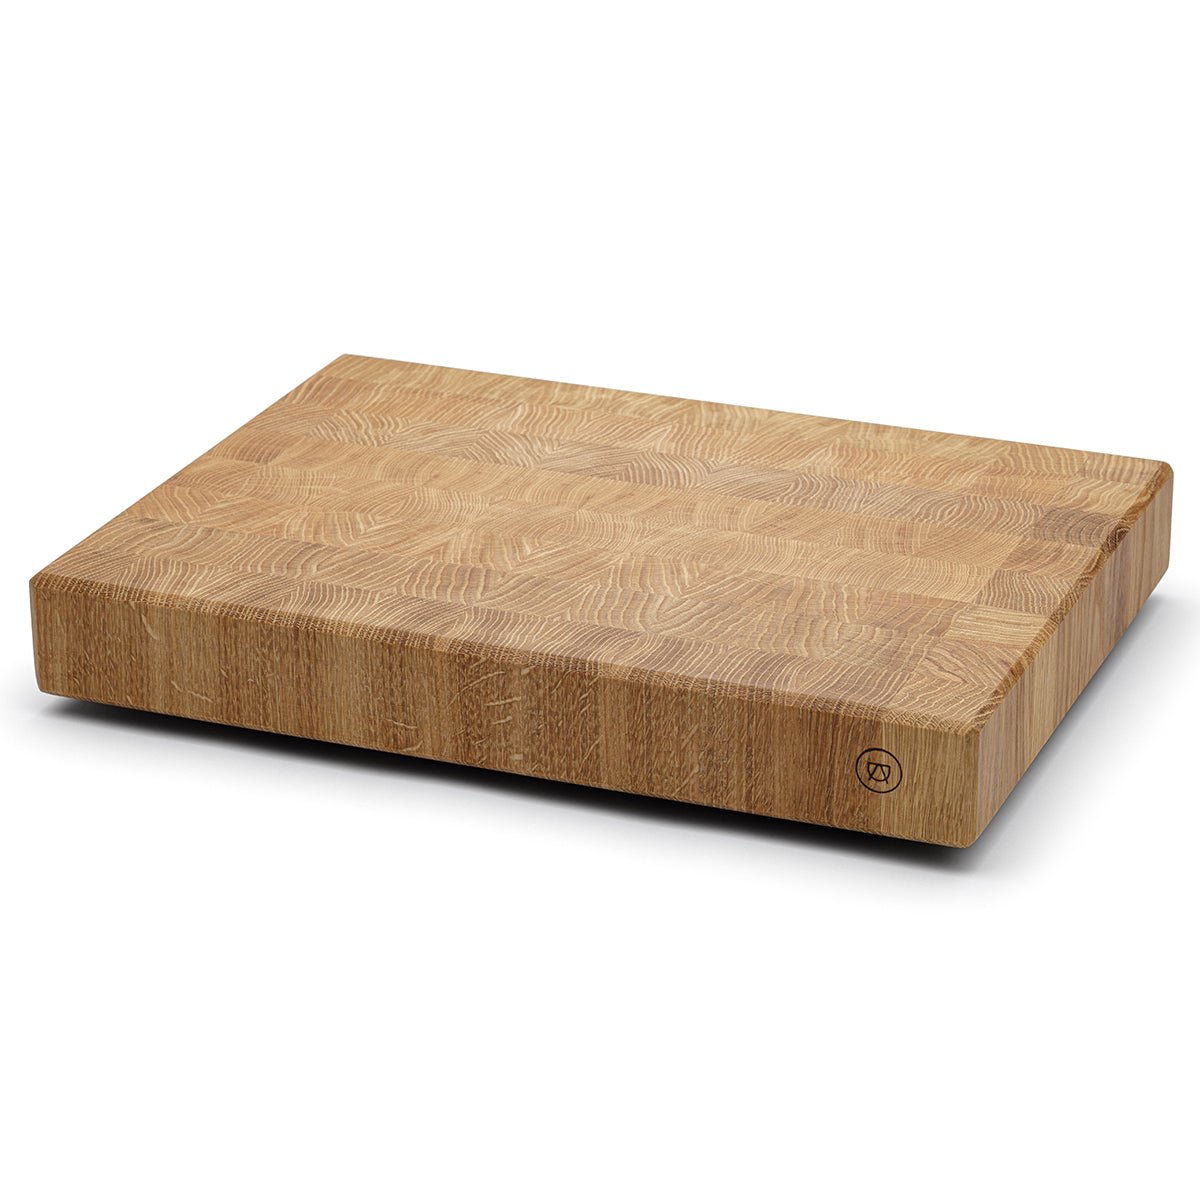 Chopping block “Hannibal” made of premium oak wood